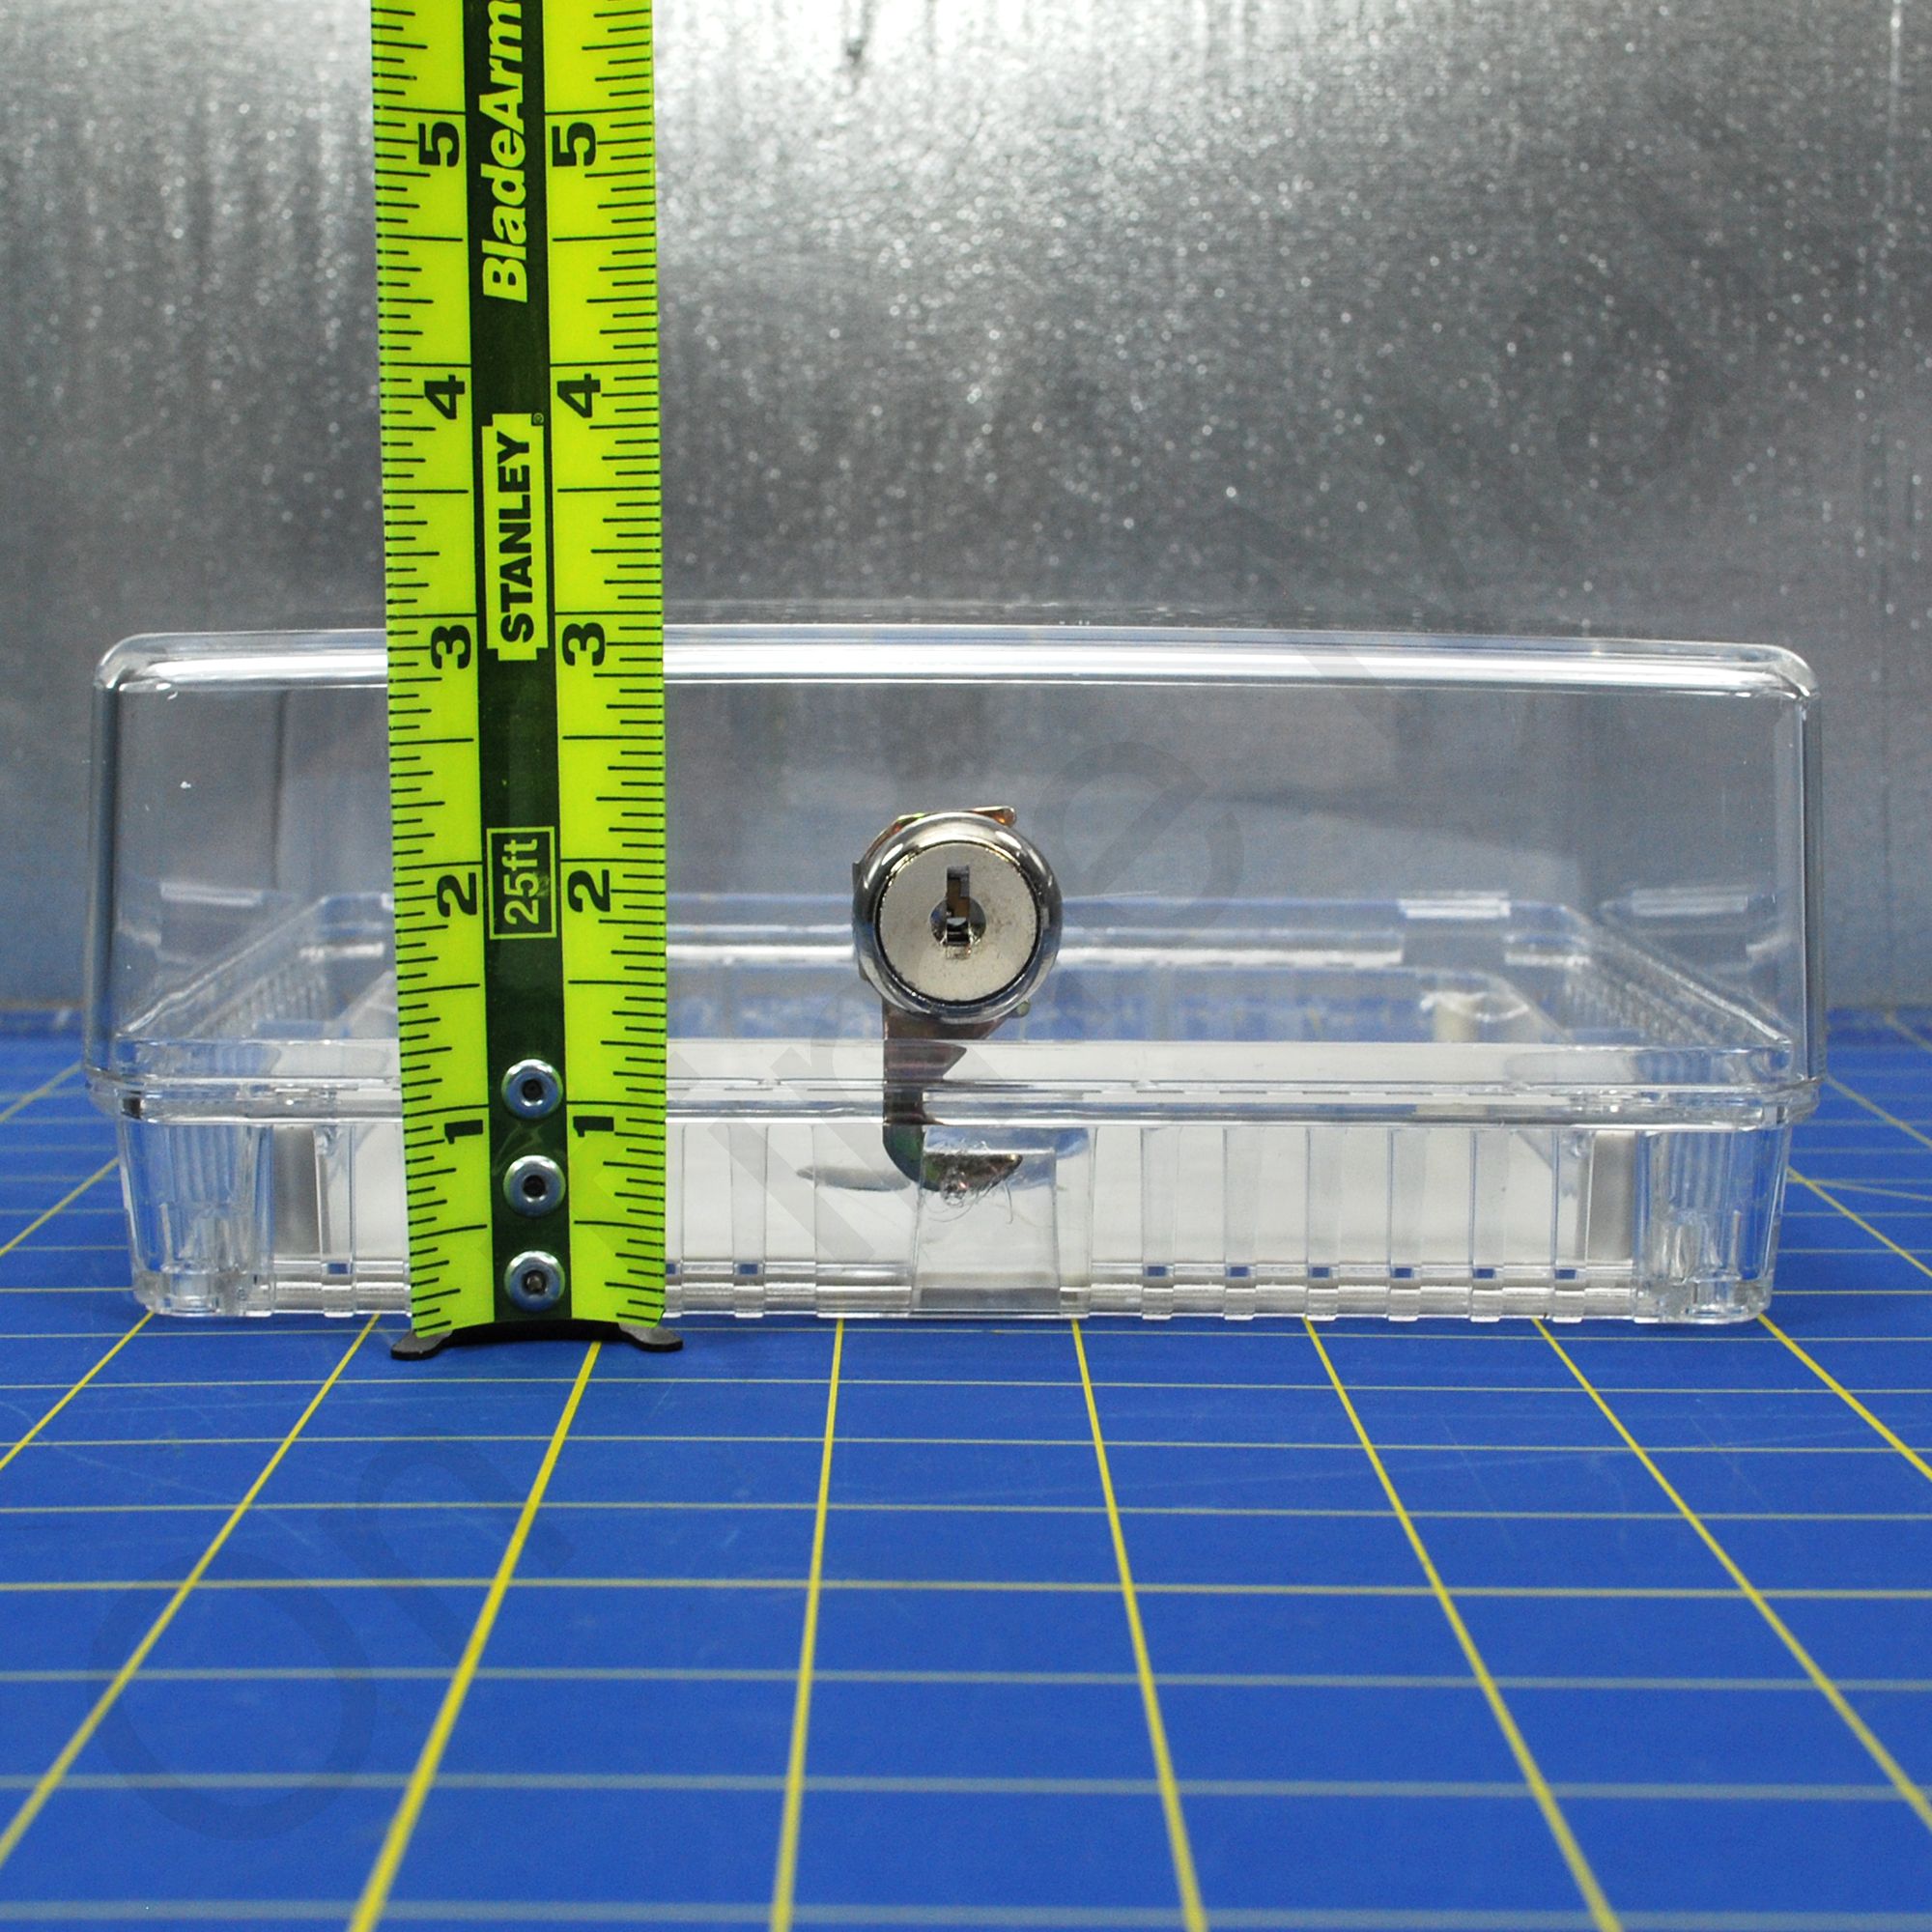 Clear Acrylic Refrigerator Lock Box